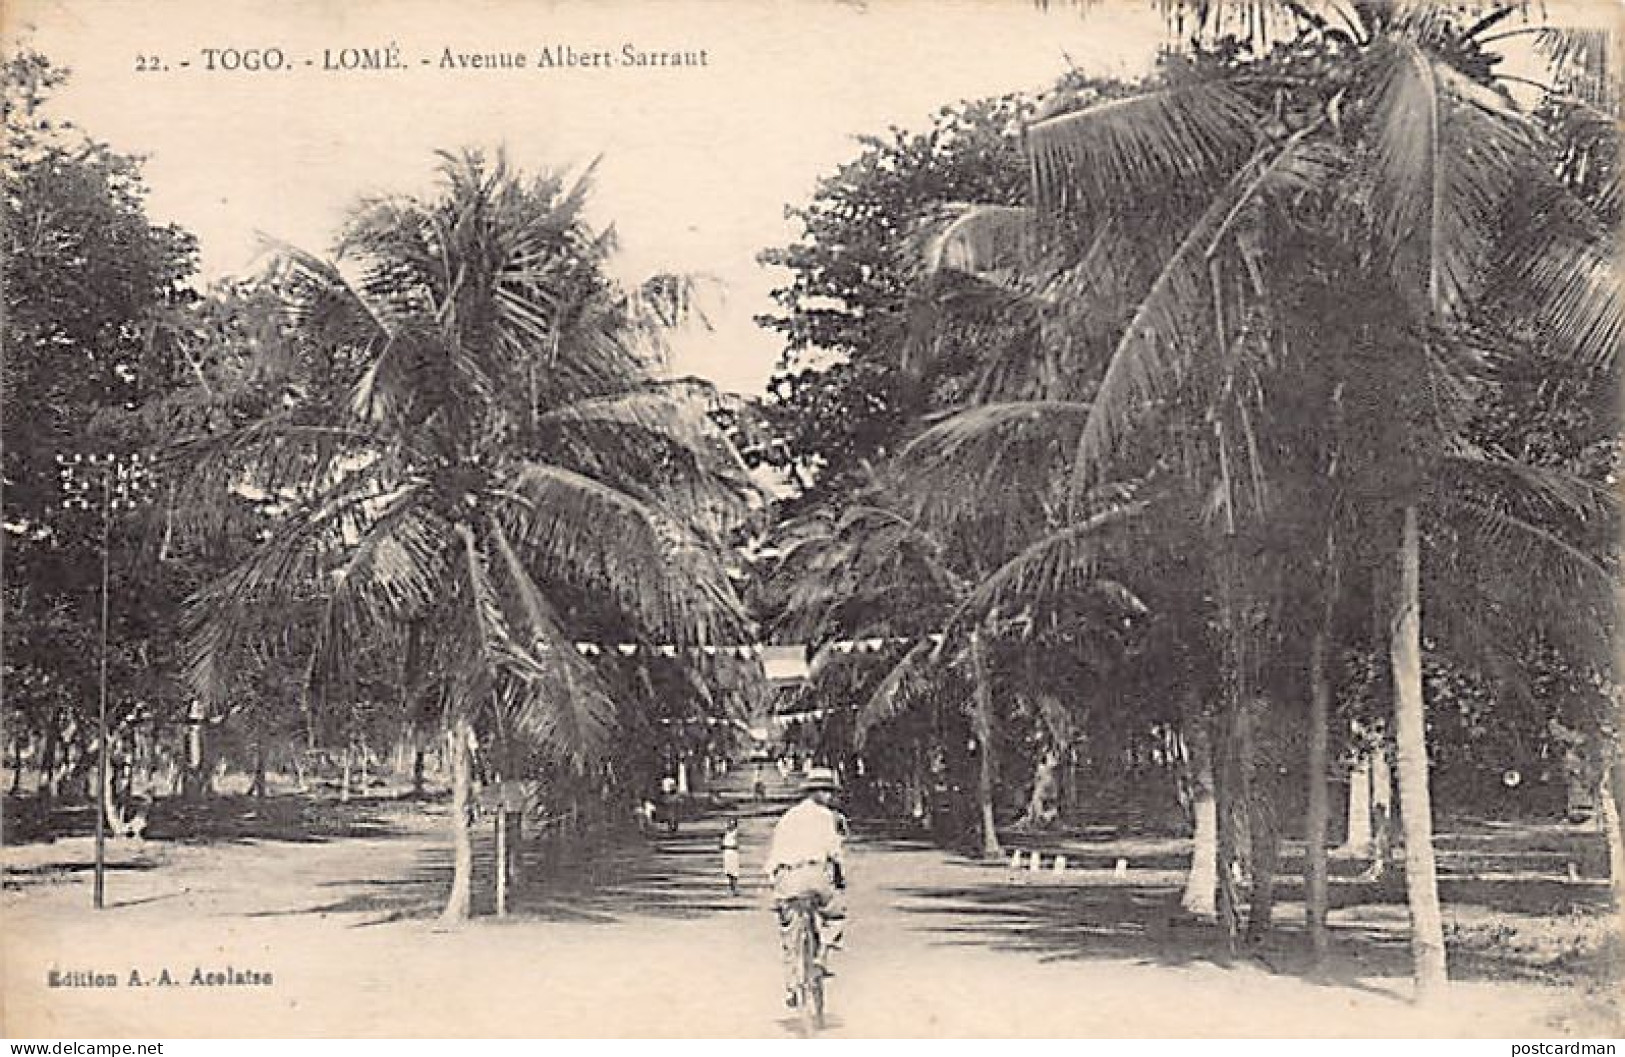 Togo - LOMÉ - Avenue Albert Sarrault - Ed. A. Accolatse 22 - Togo